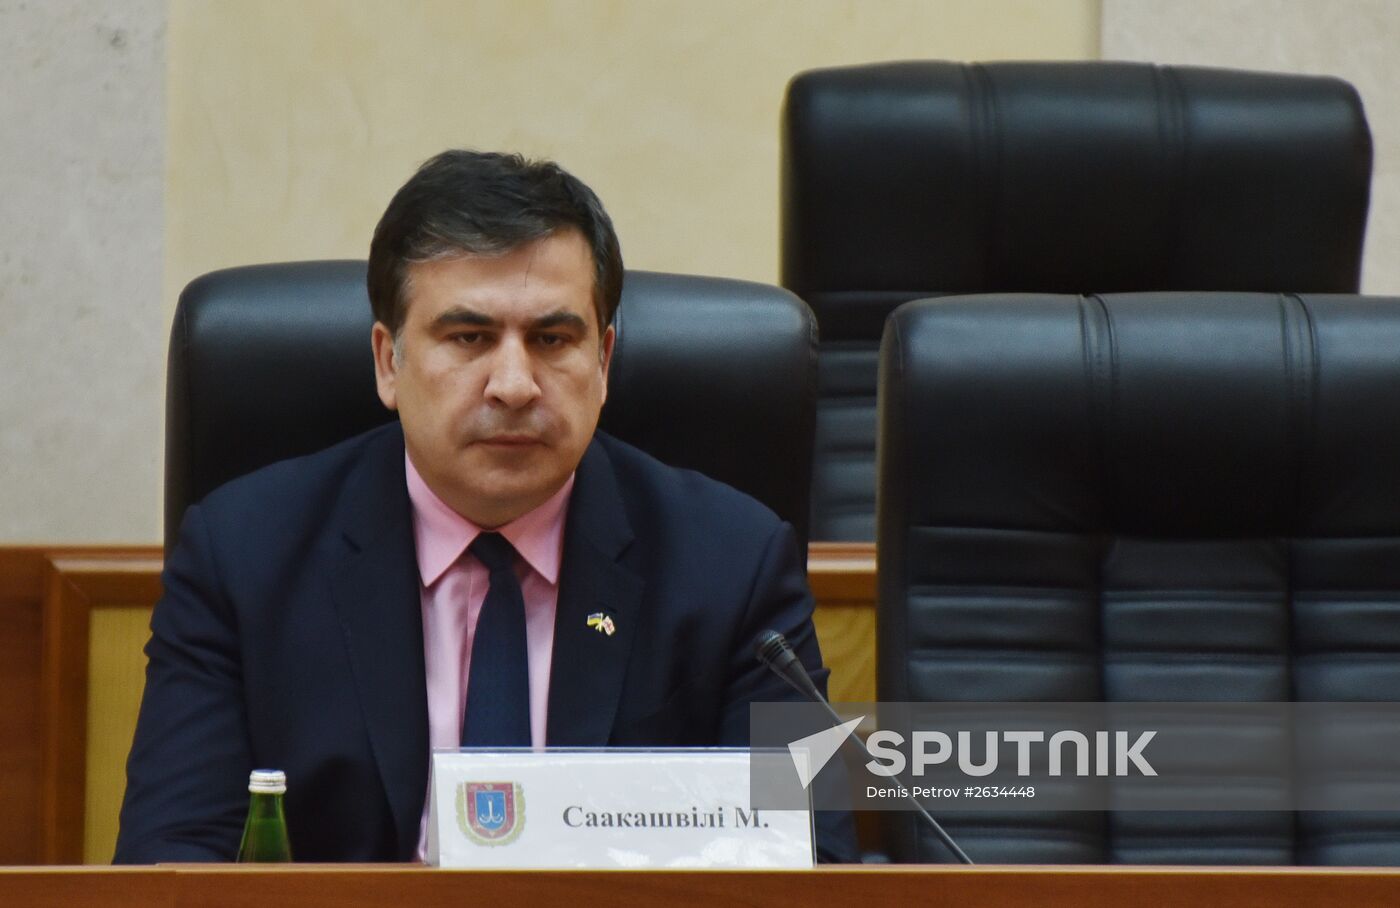 Ukrainian President Poroshenko appoints Mikheil Saakashvili Governor of Odessa Region